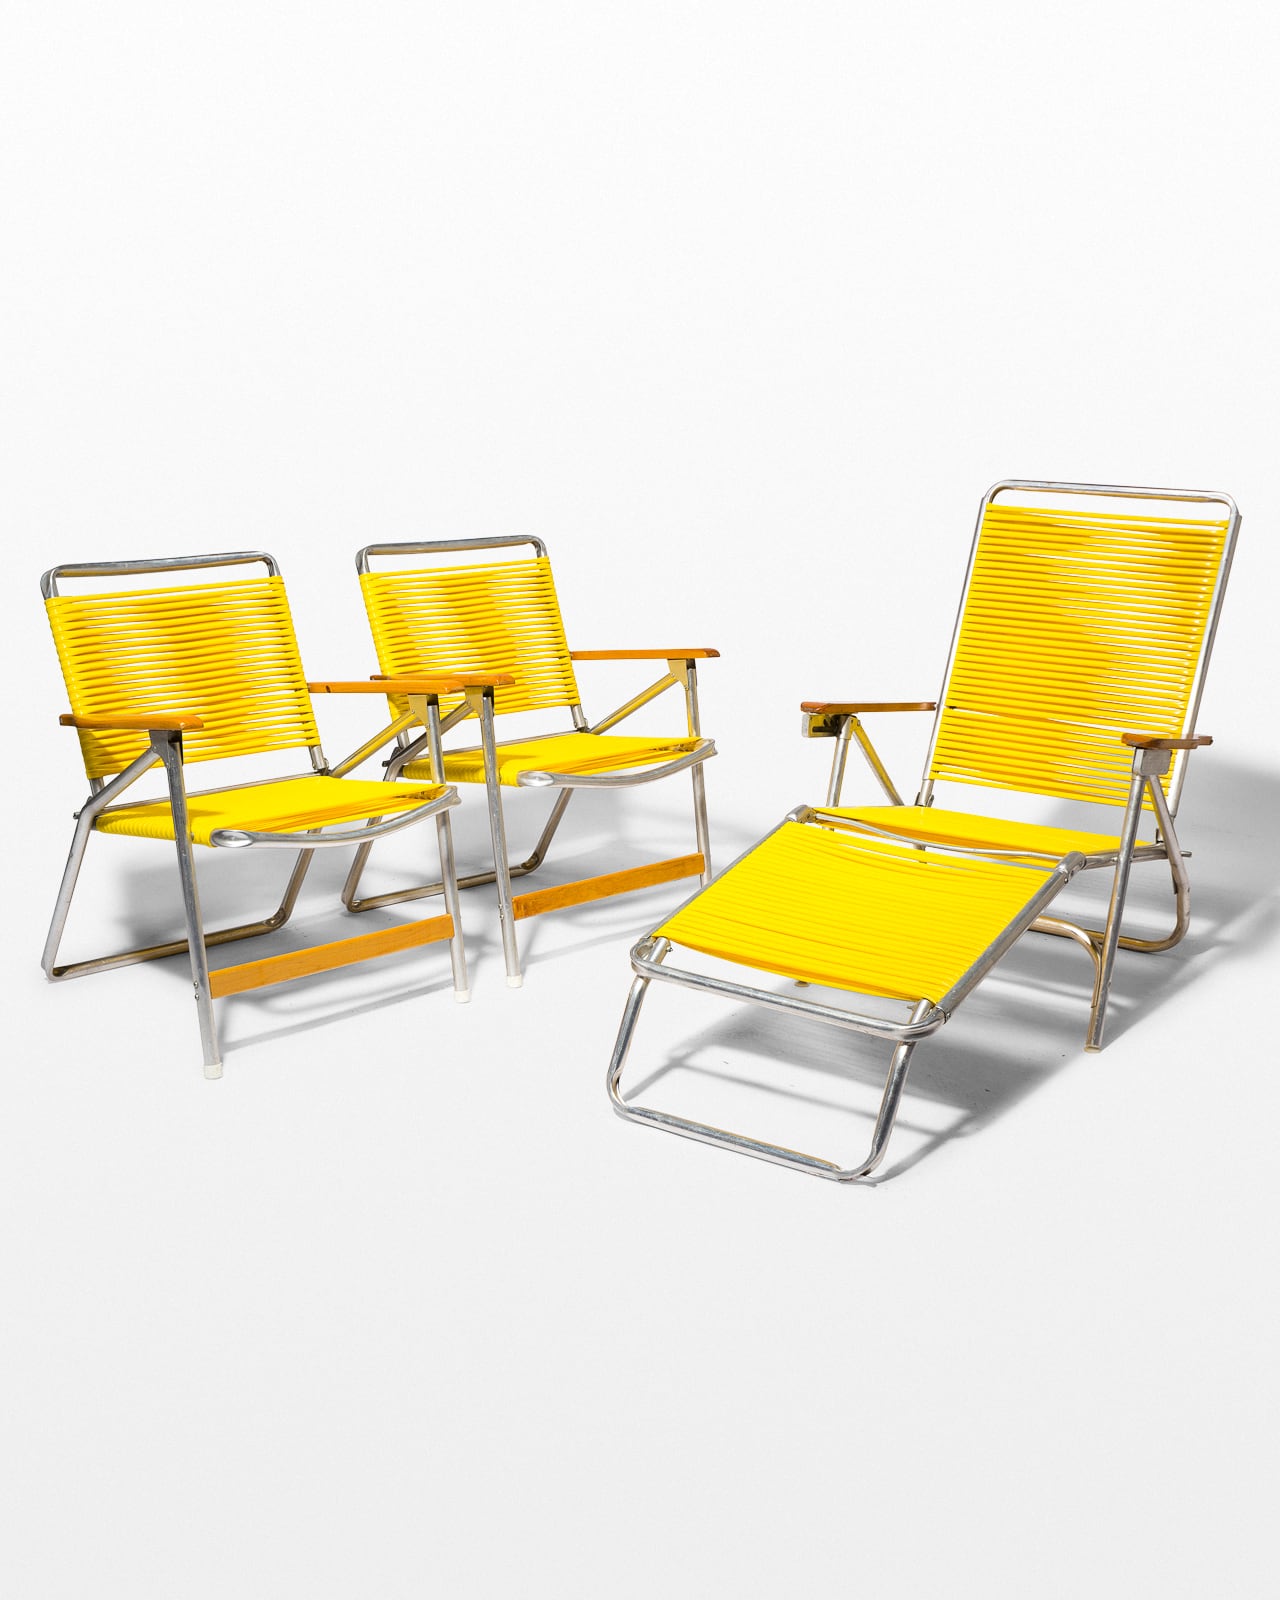 Minimalist Daytona Beach Lounge Chair Rentals with Simple Decor